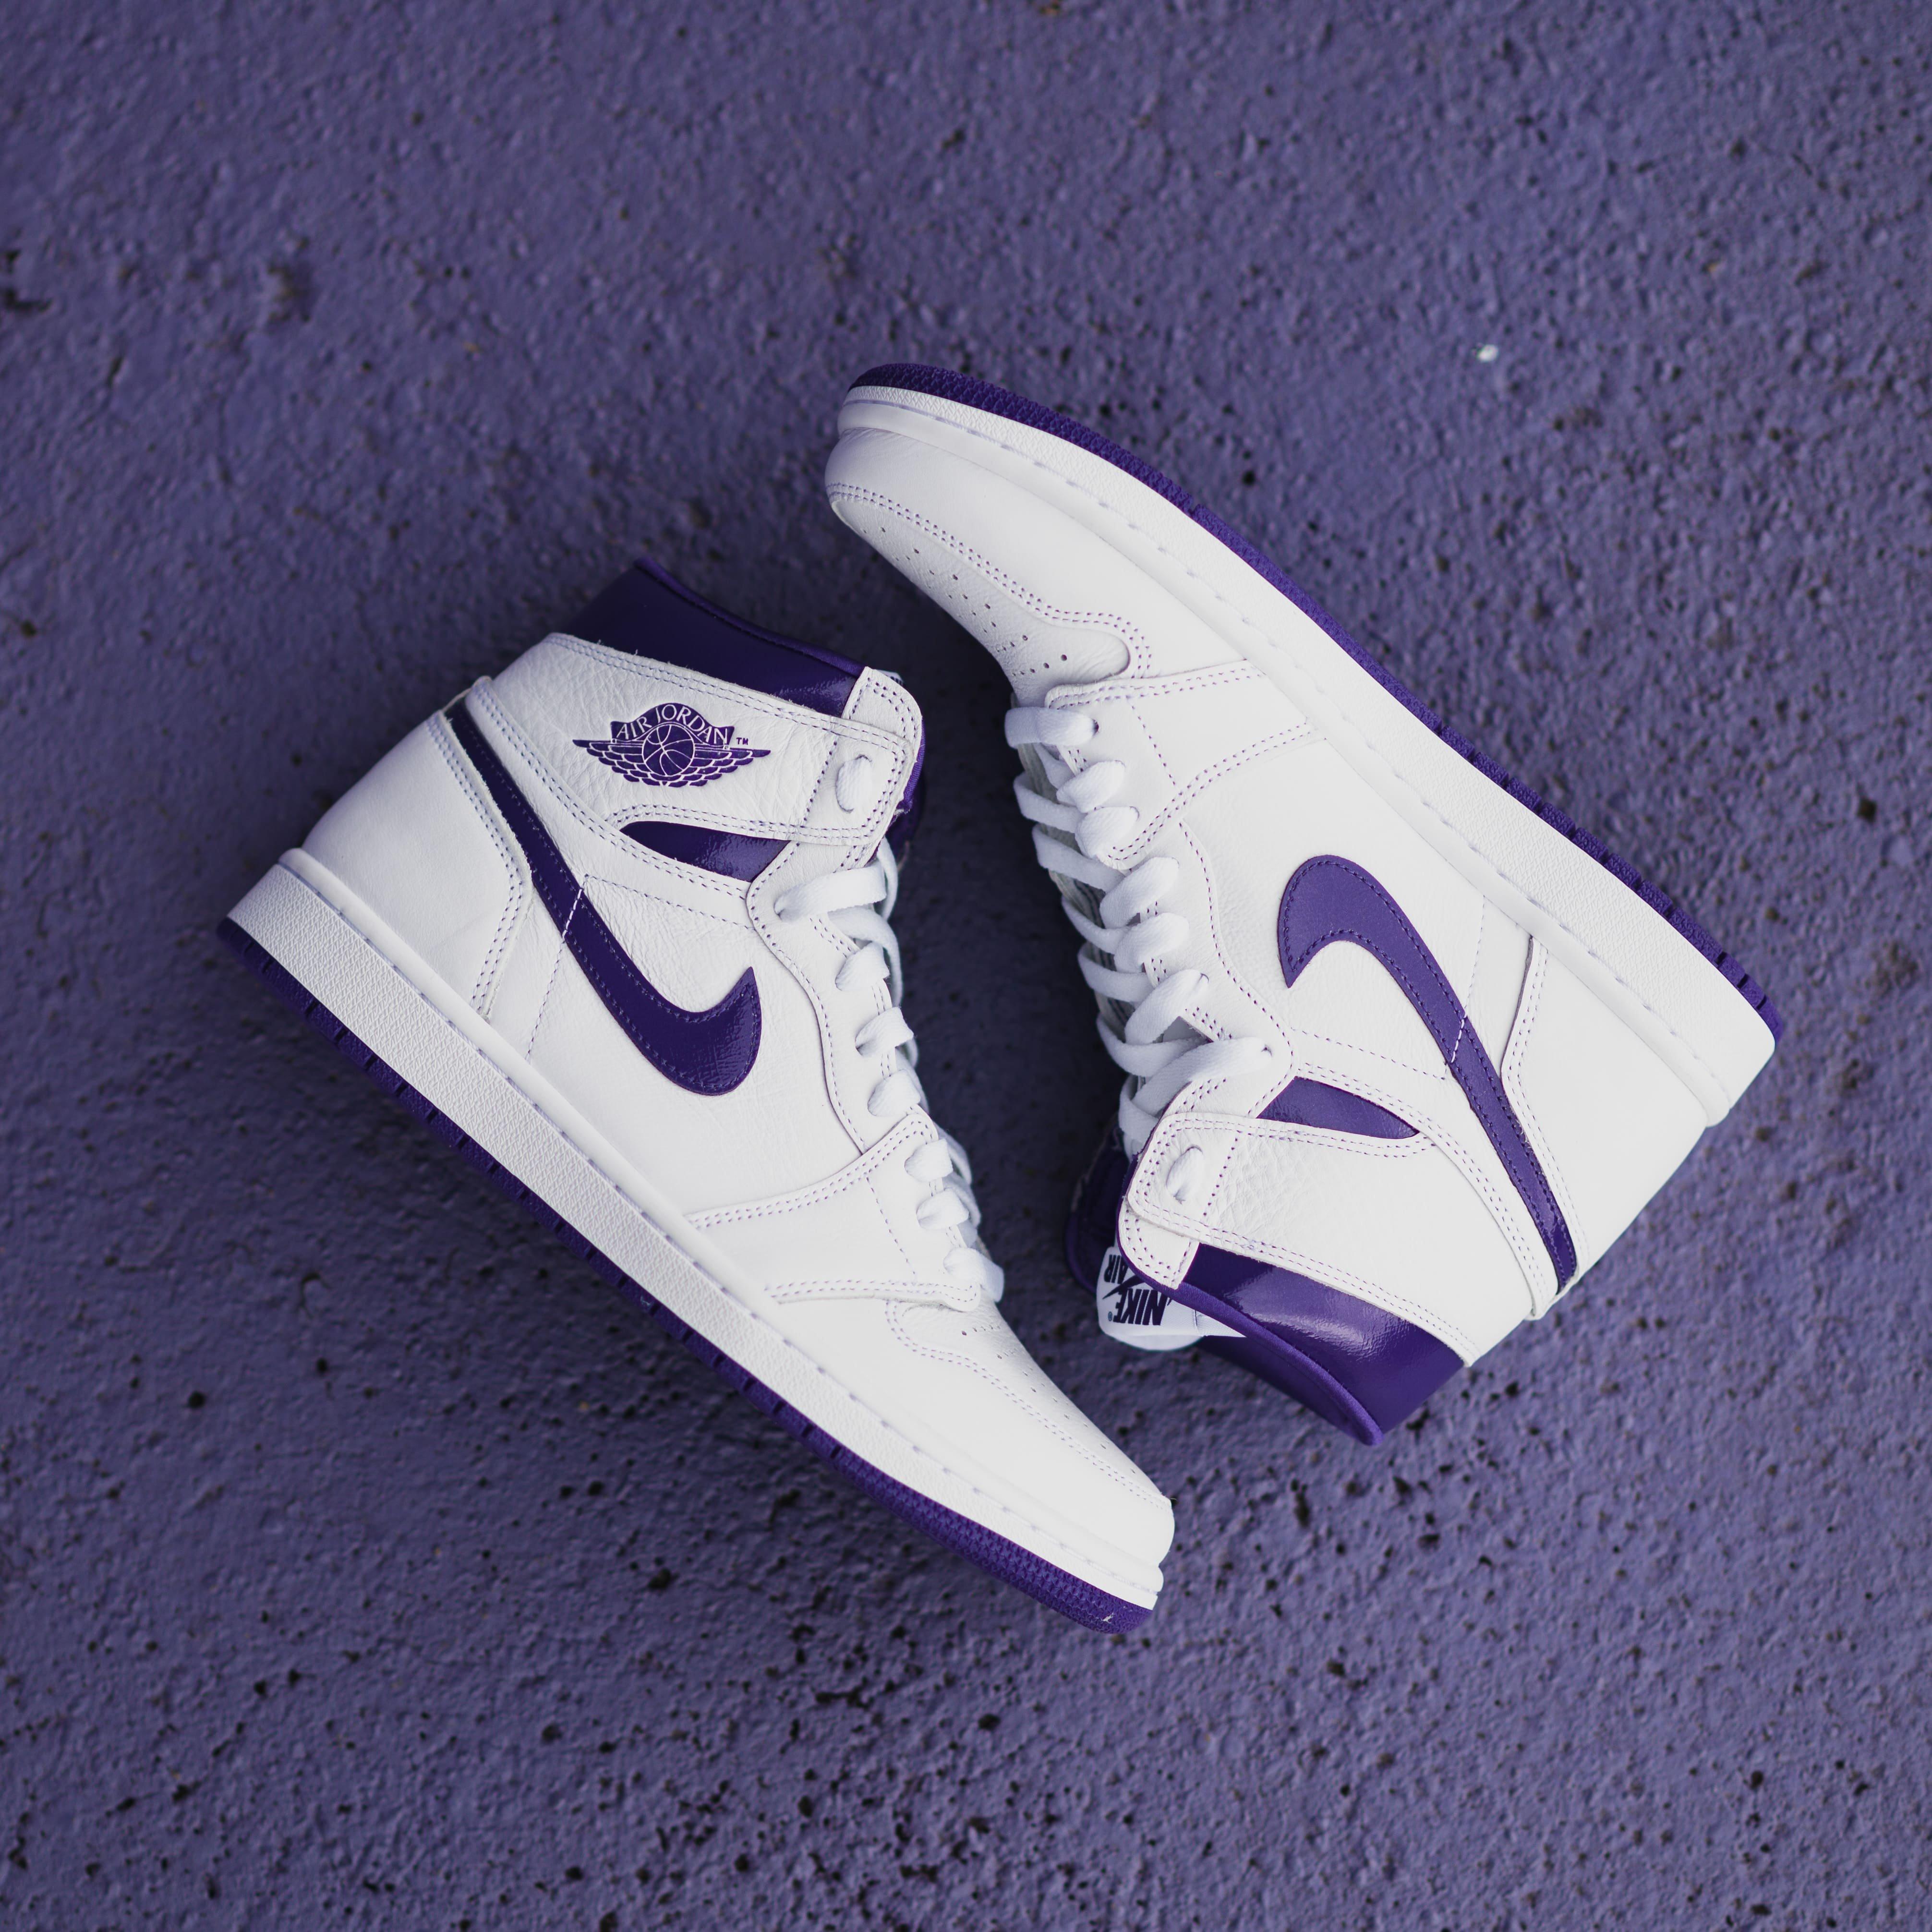 court purple jordan 1 hibbett sports